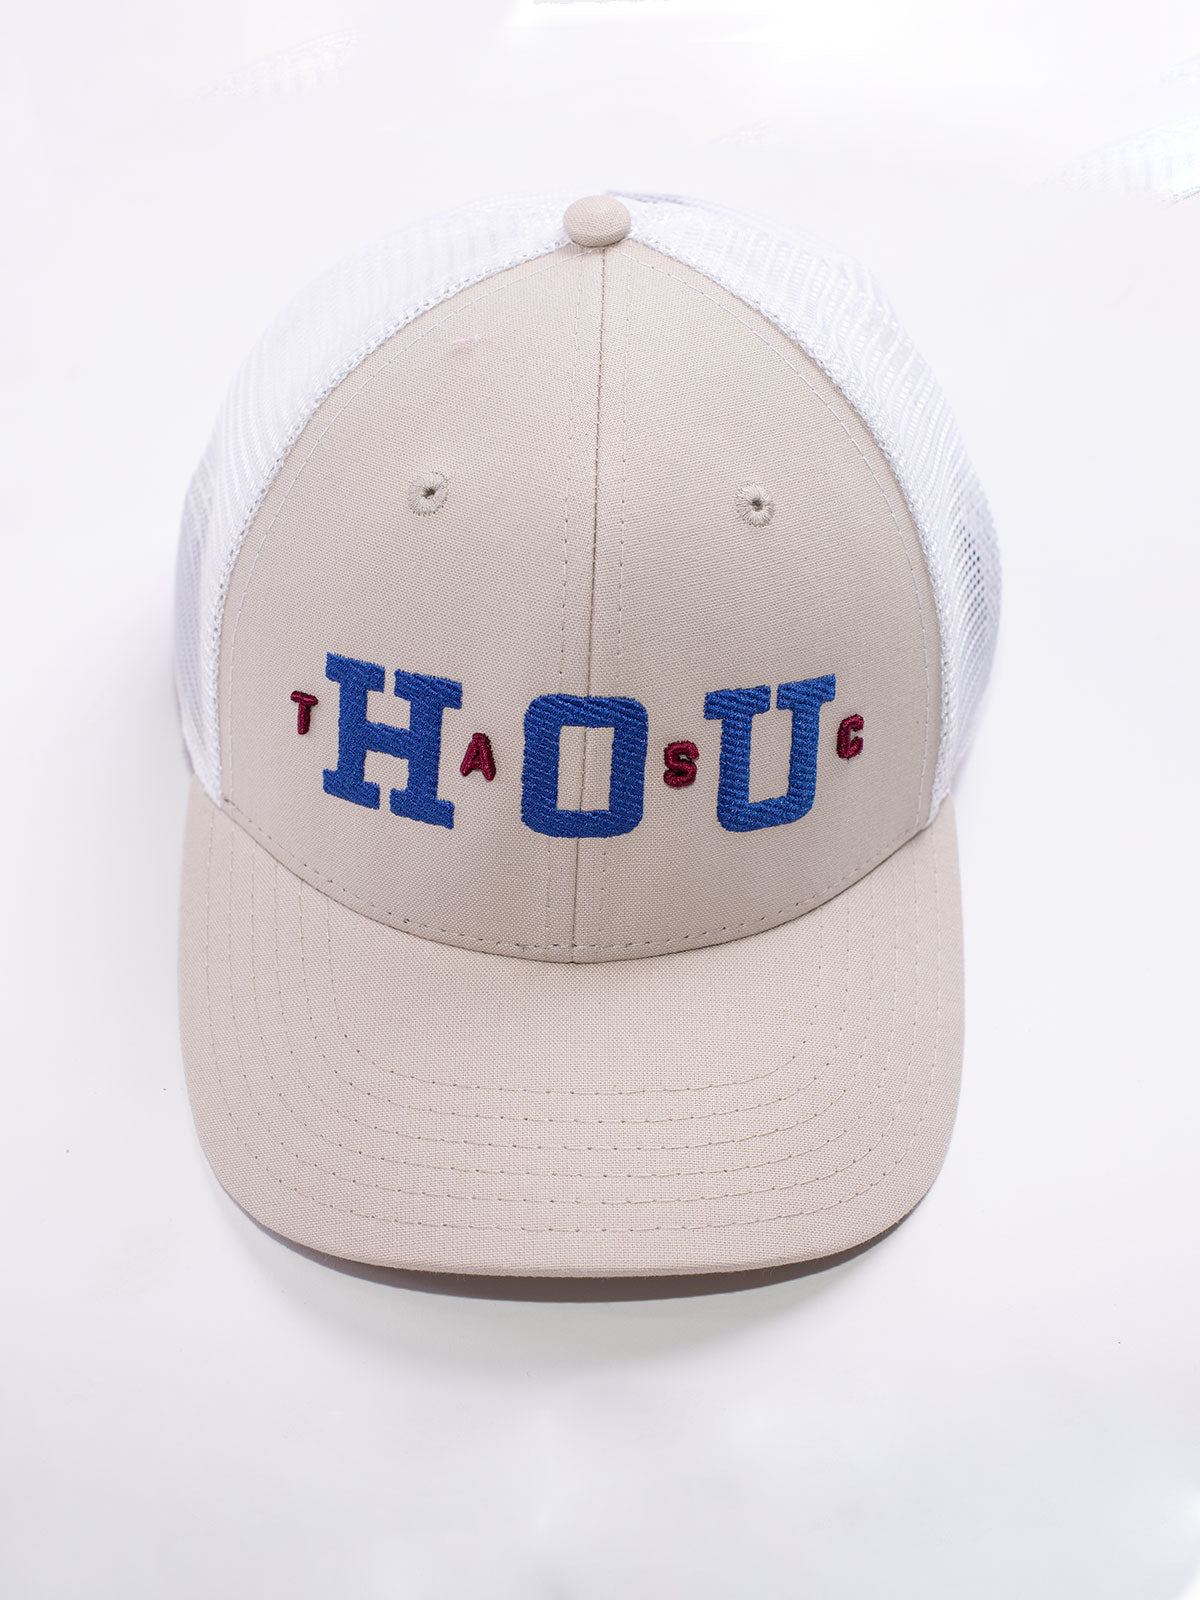 Houston Trucker Hat tasc performance (Stone/Houston)